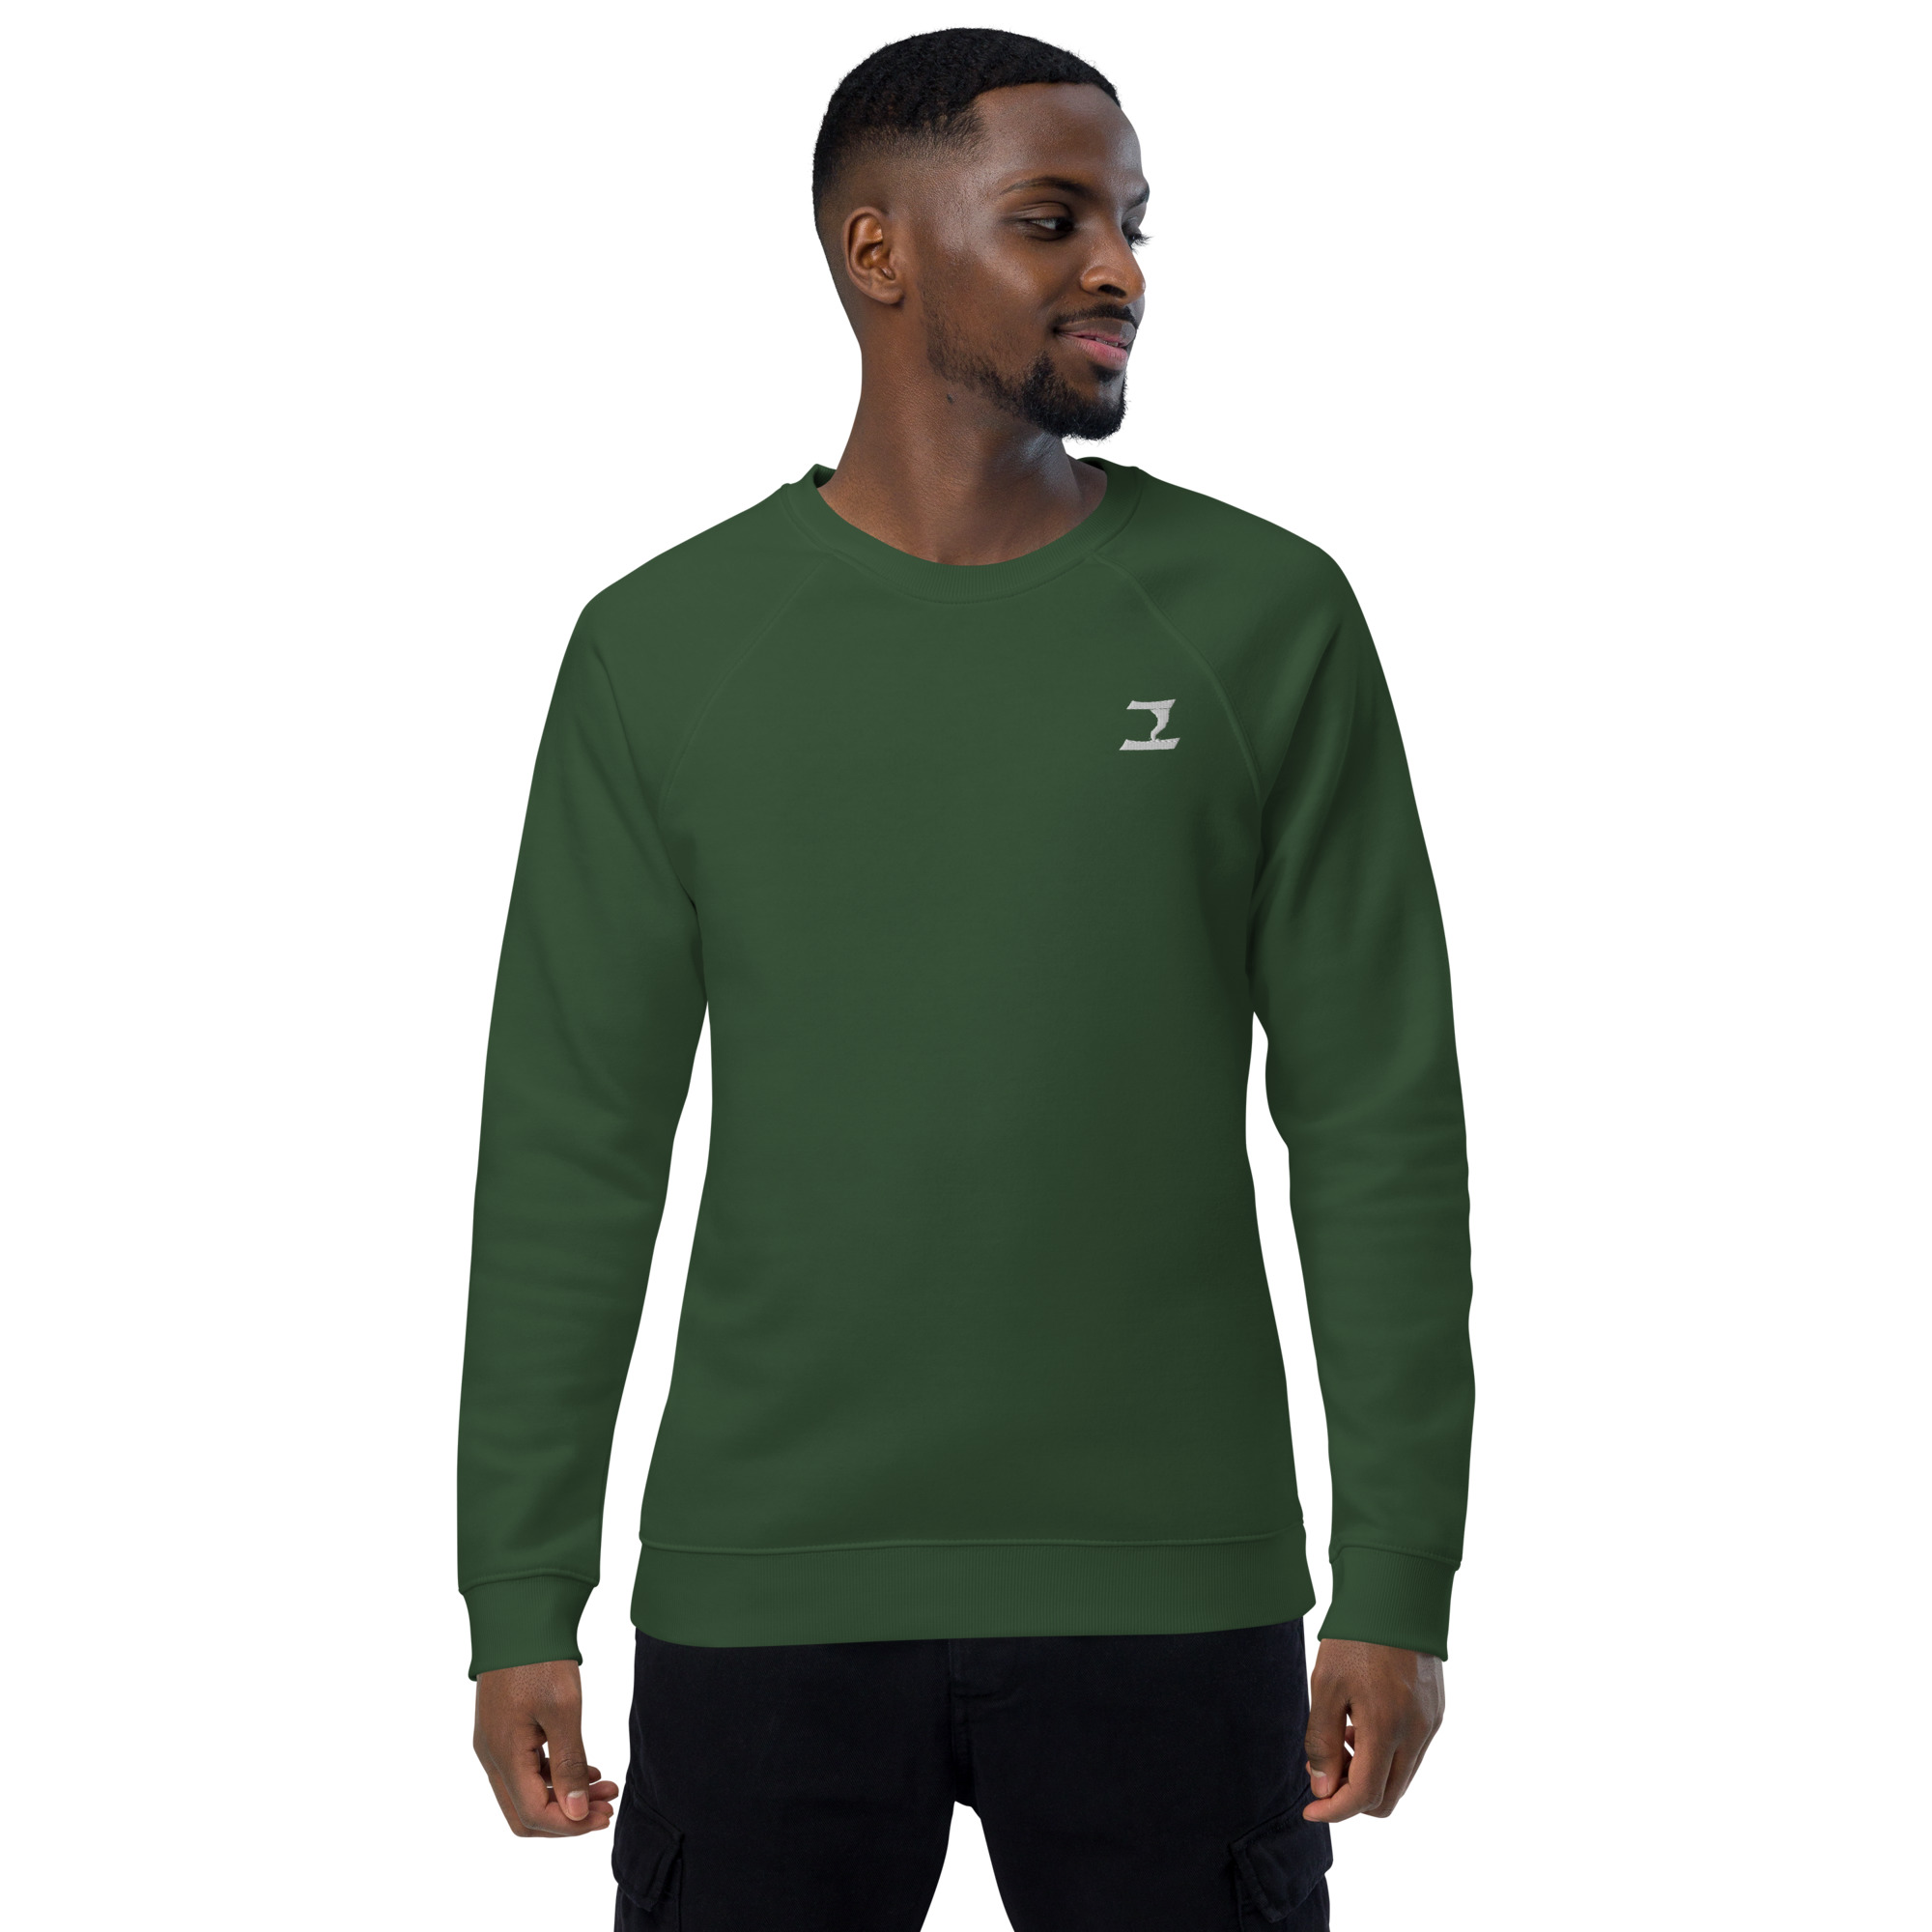 unisex-organic-raglan-sweatshirt-bottle-green-front-6334e2624c244.jpg